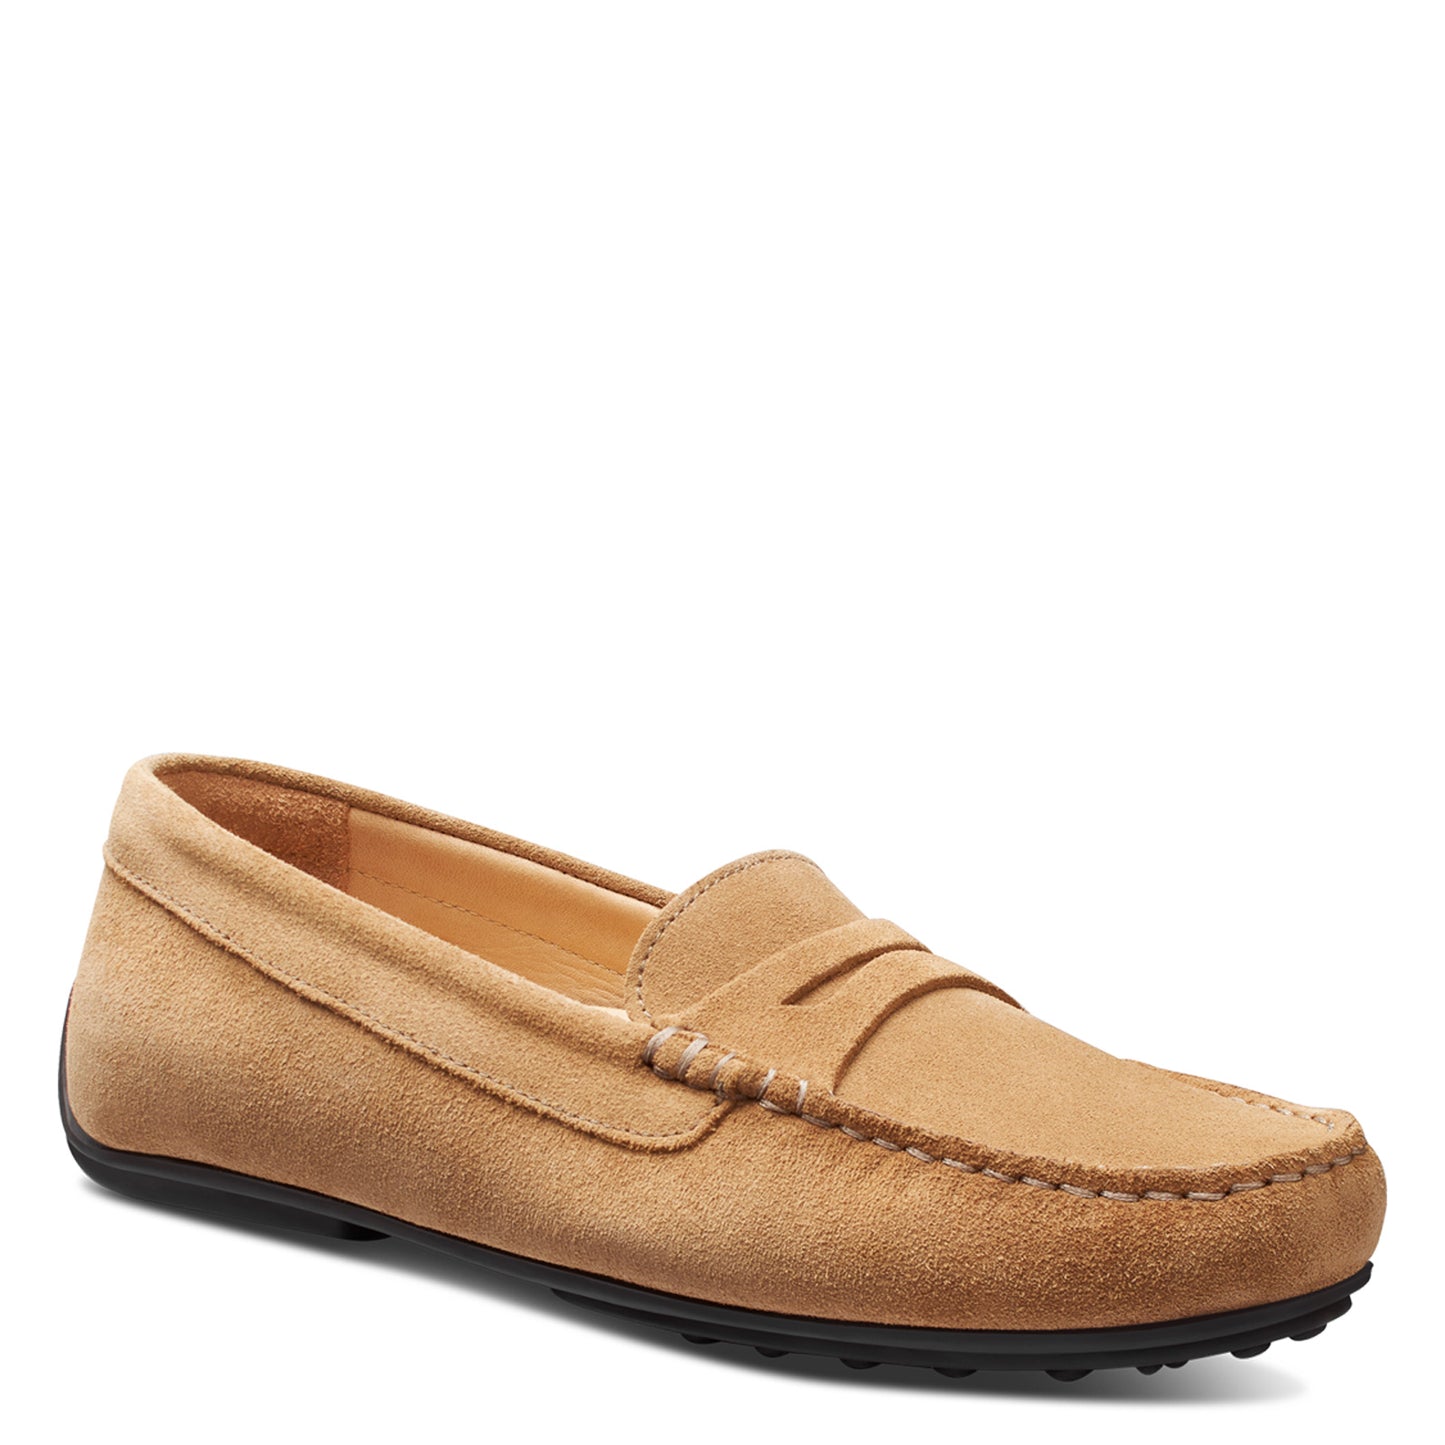 Peltz Shoes  Women's Samuel Hubbard Free Spirit Slip-On Hazelnut Suede W2111-414